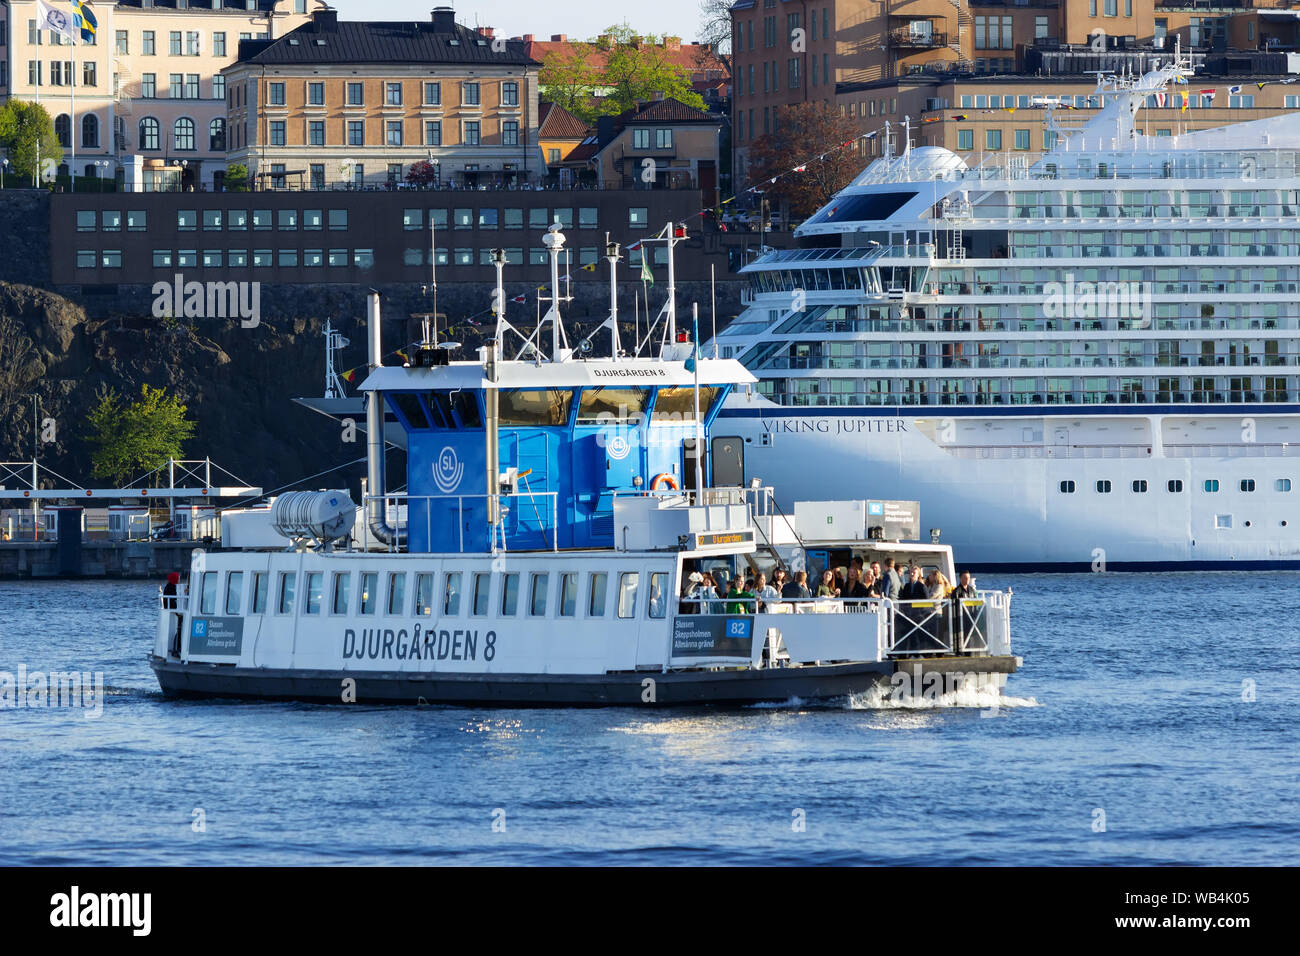 SL (transportation company) Commuter ferry 'Djurgarden 8' carries passengers to the various stop destinations around central stockholm, Djurgarden etc Stock Photo